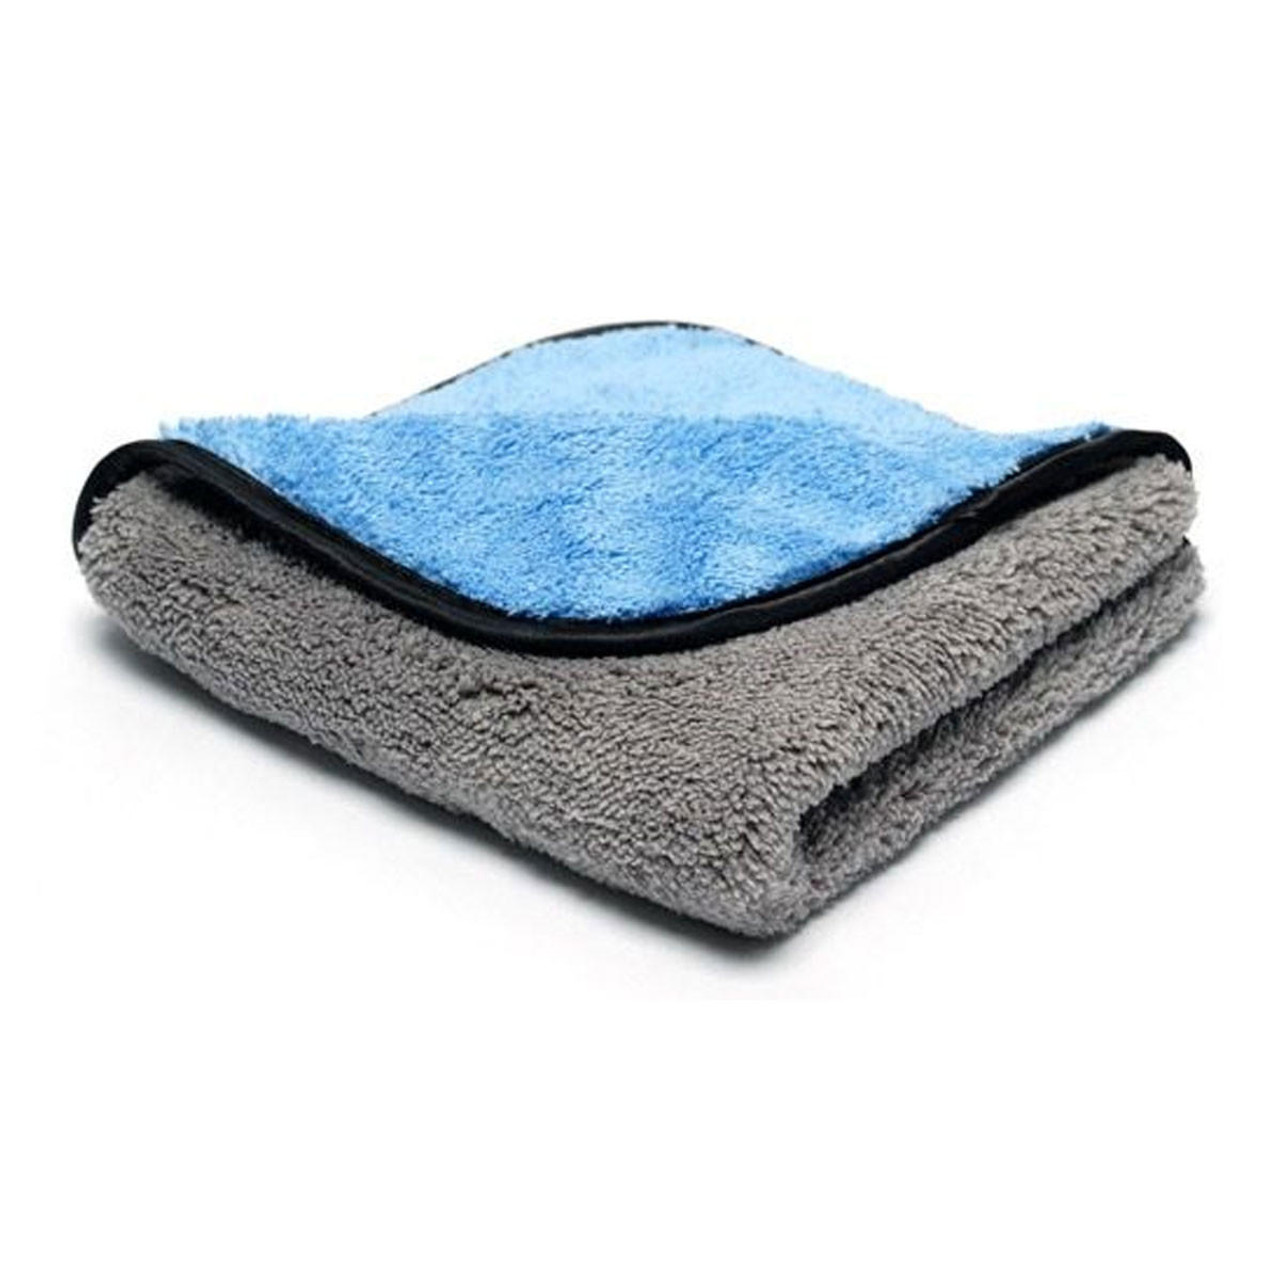 Dry Shine Waterless Car Wash & Wax (2 Pack) Plus 2 Microfiber Towels